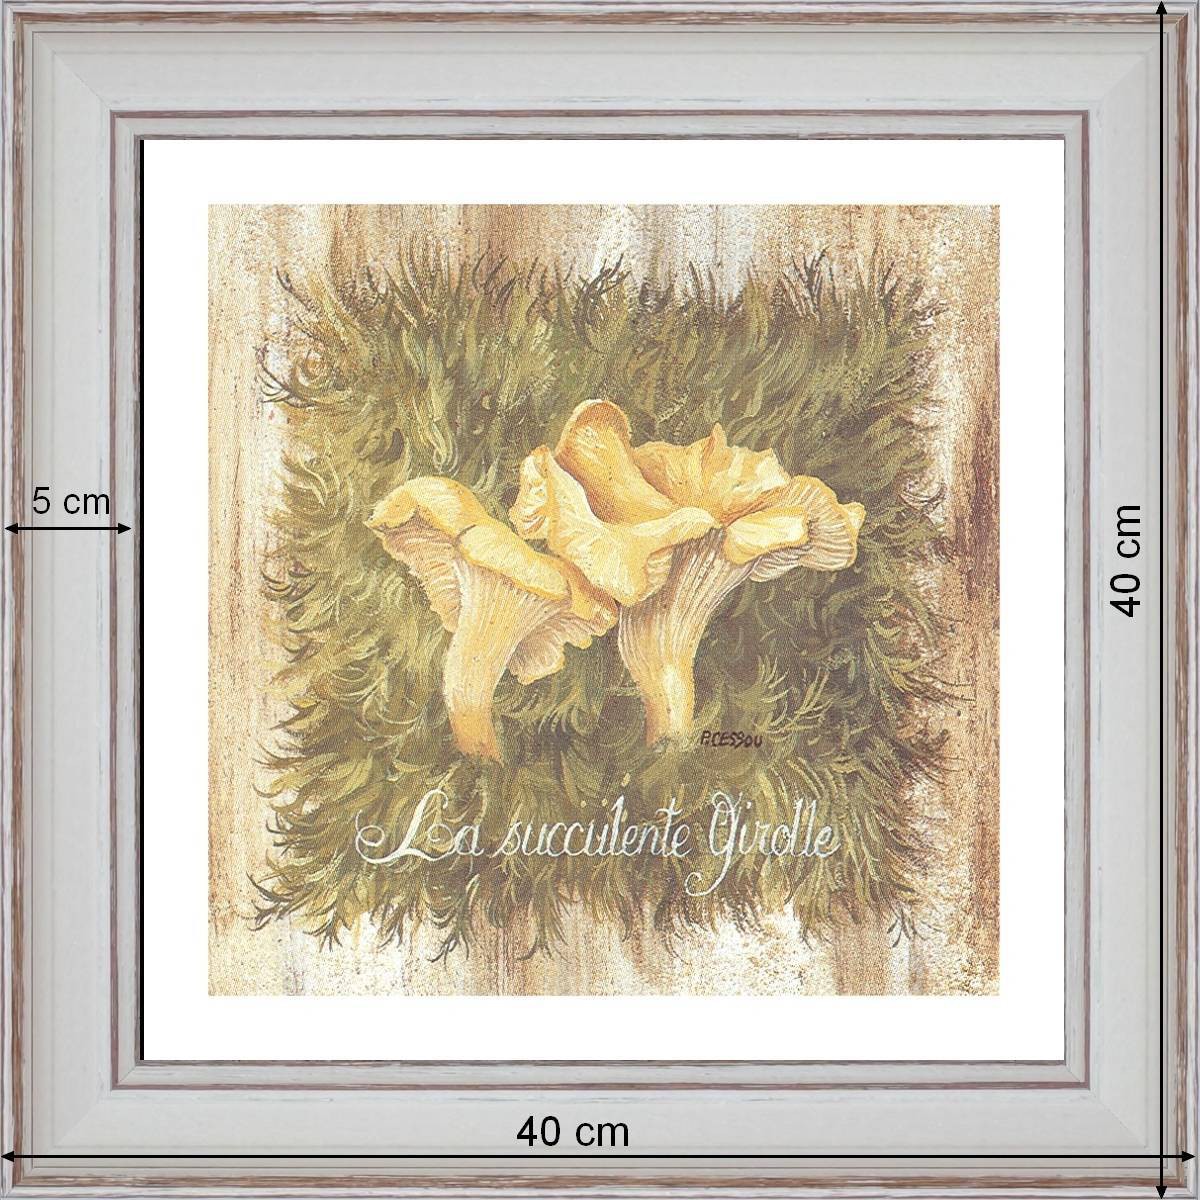 Succulent Girolle - dimensions 40 x 40 cm - White